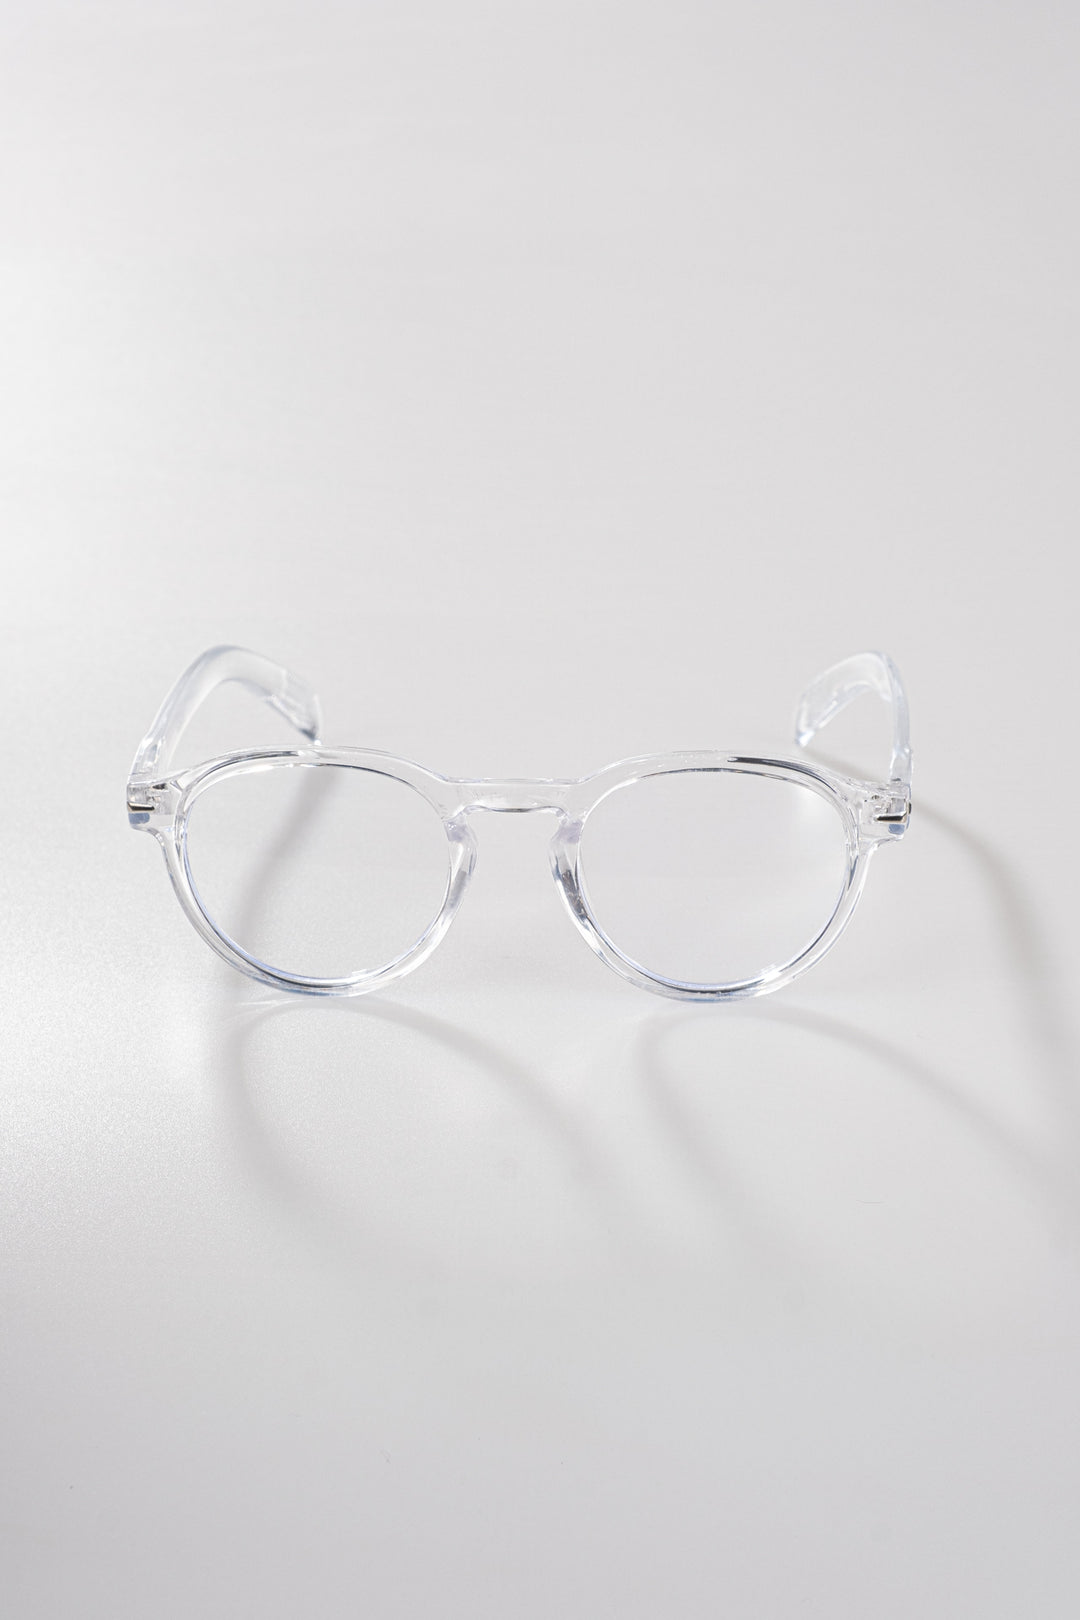 Roseua Blue Light Protection Glasses